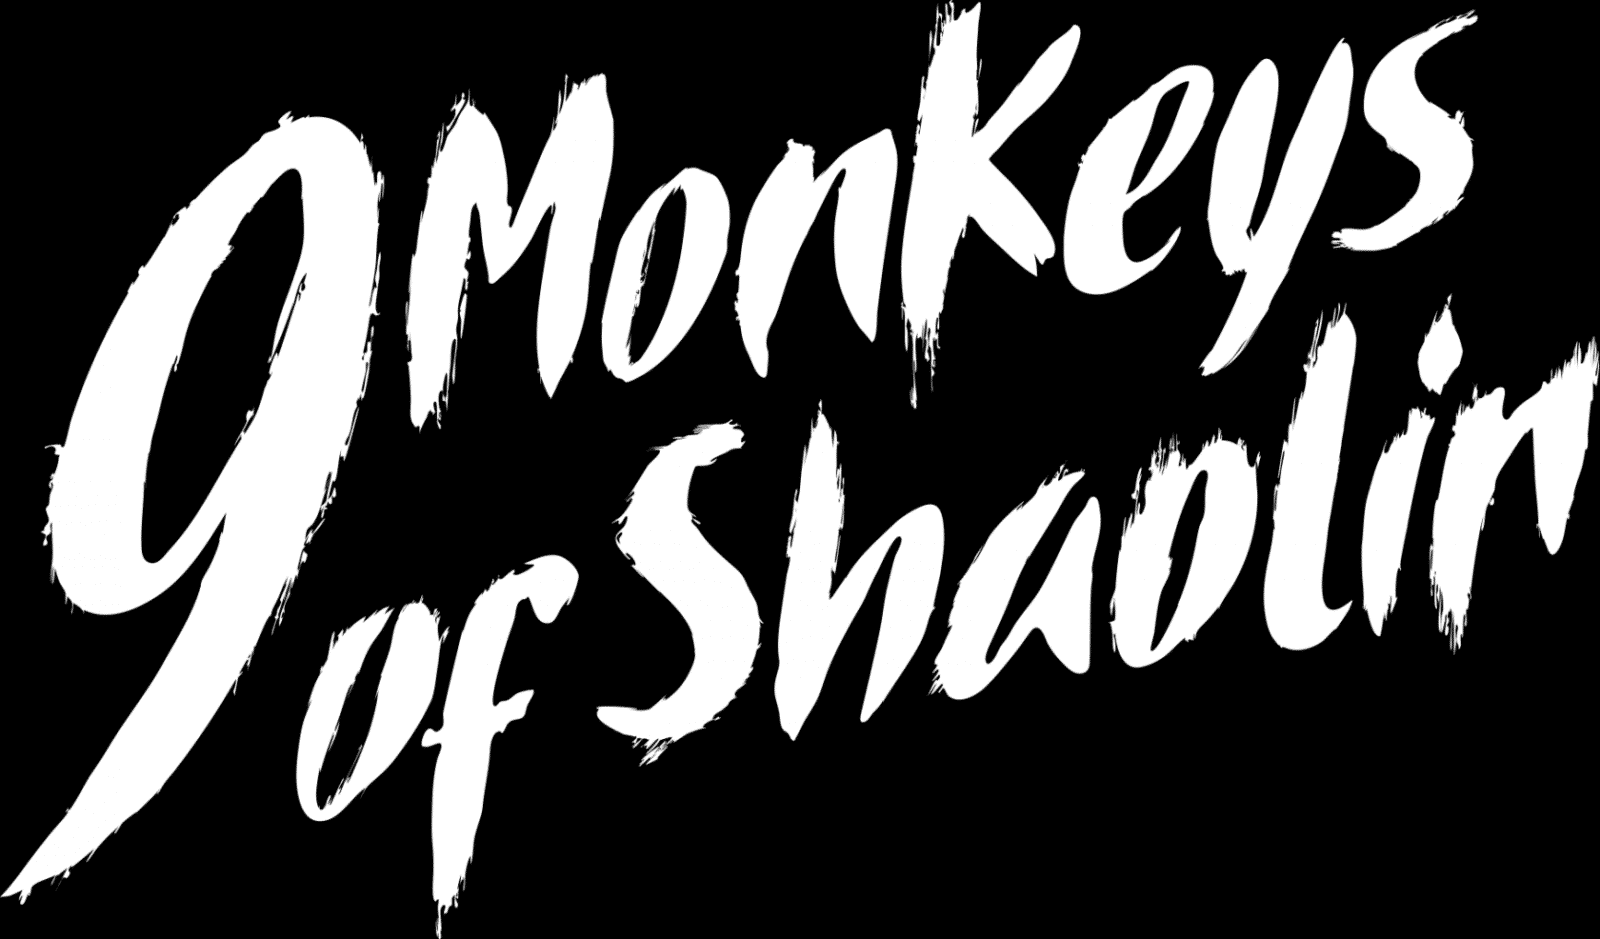 9 monkeys of shaolin logo